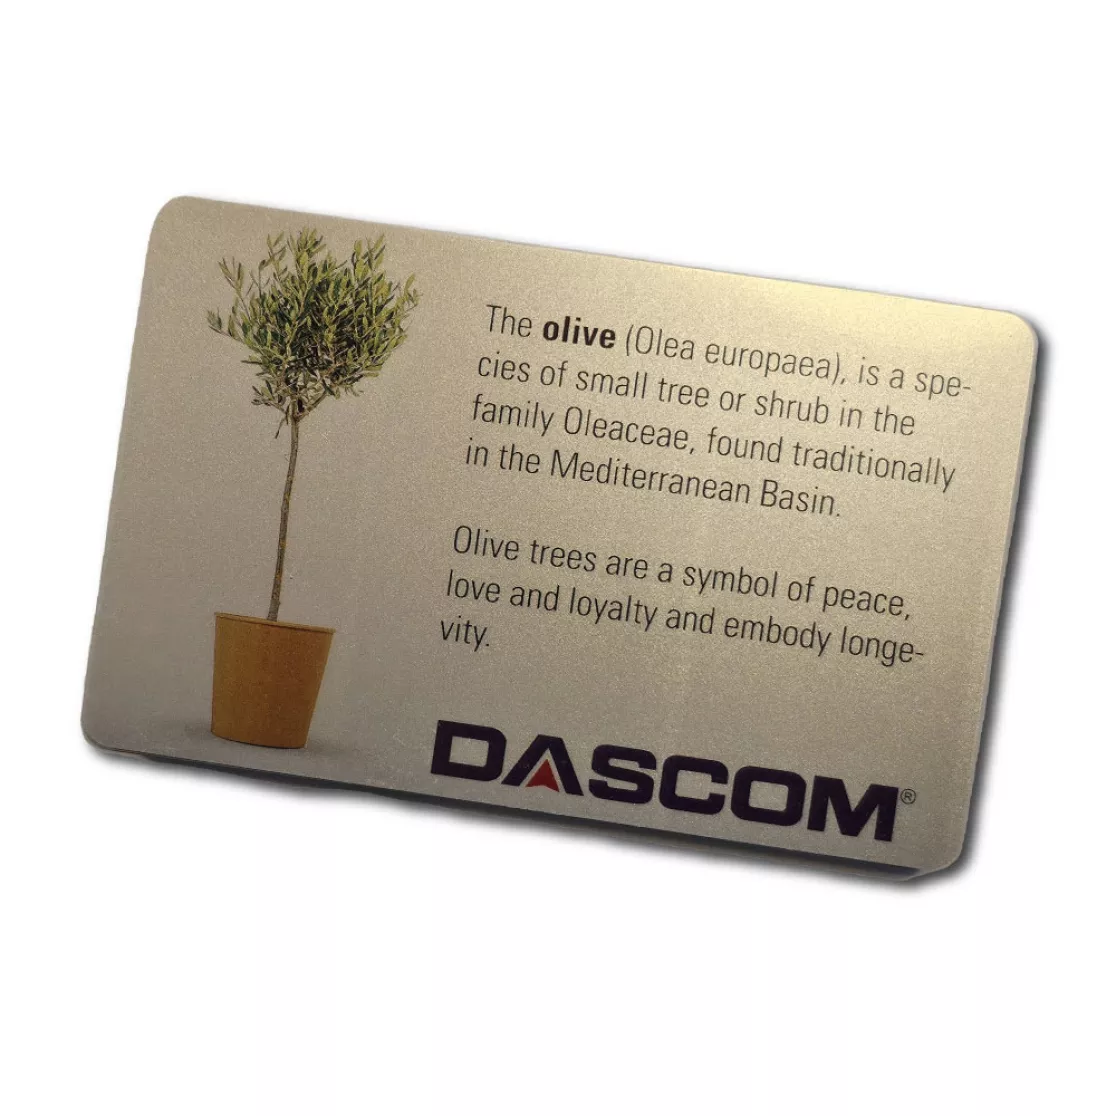 Dascom metallic print